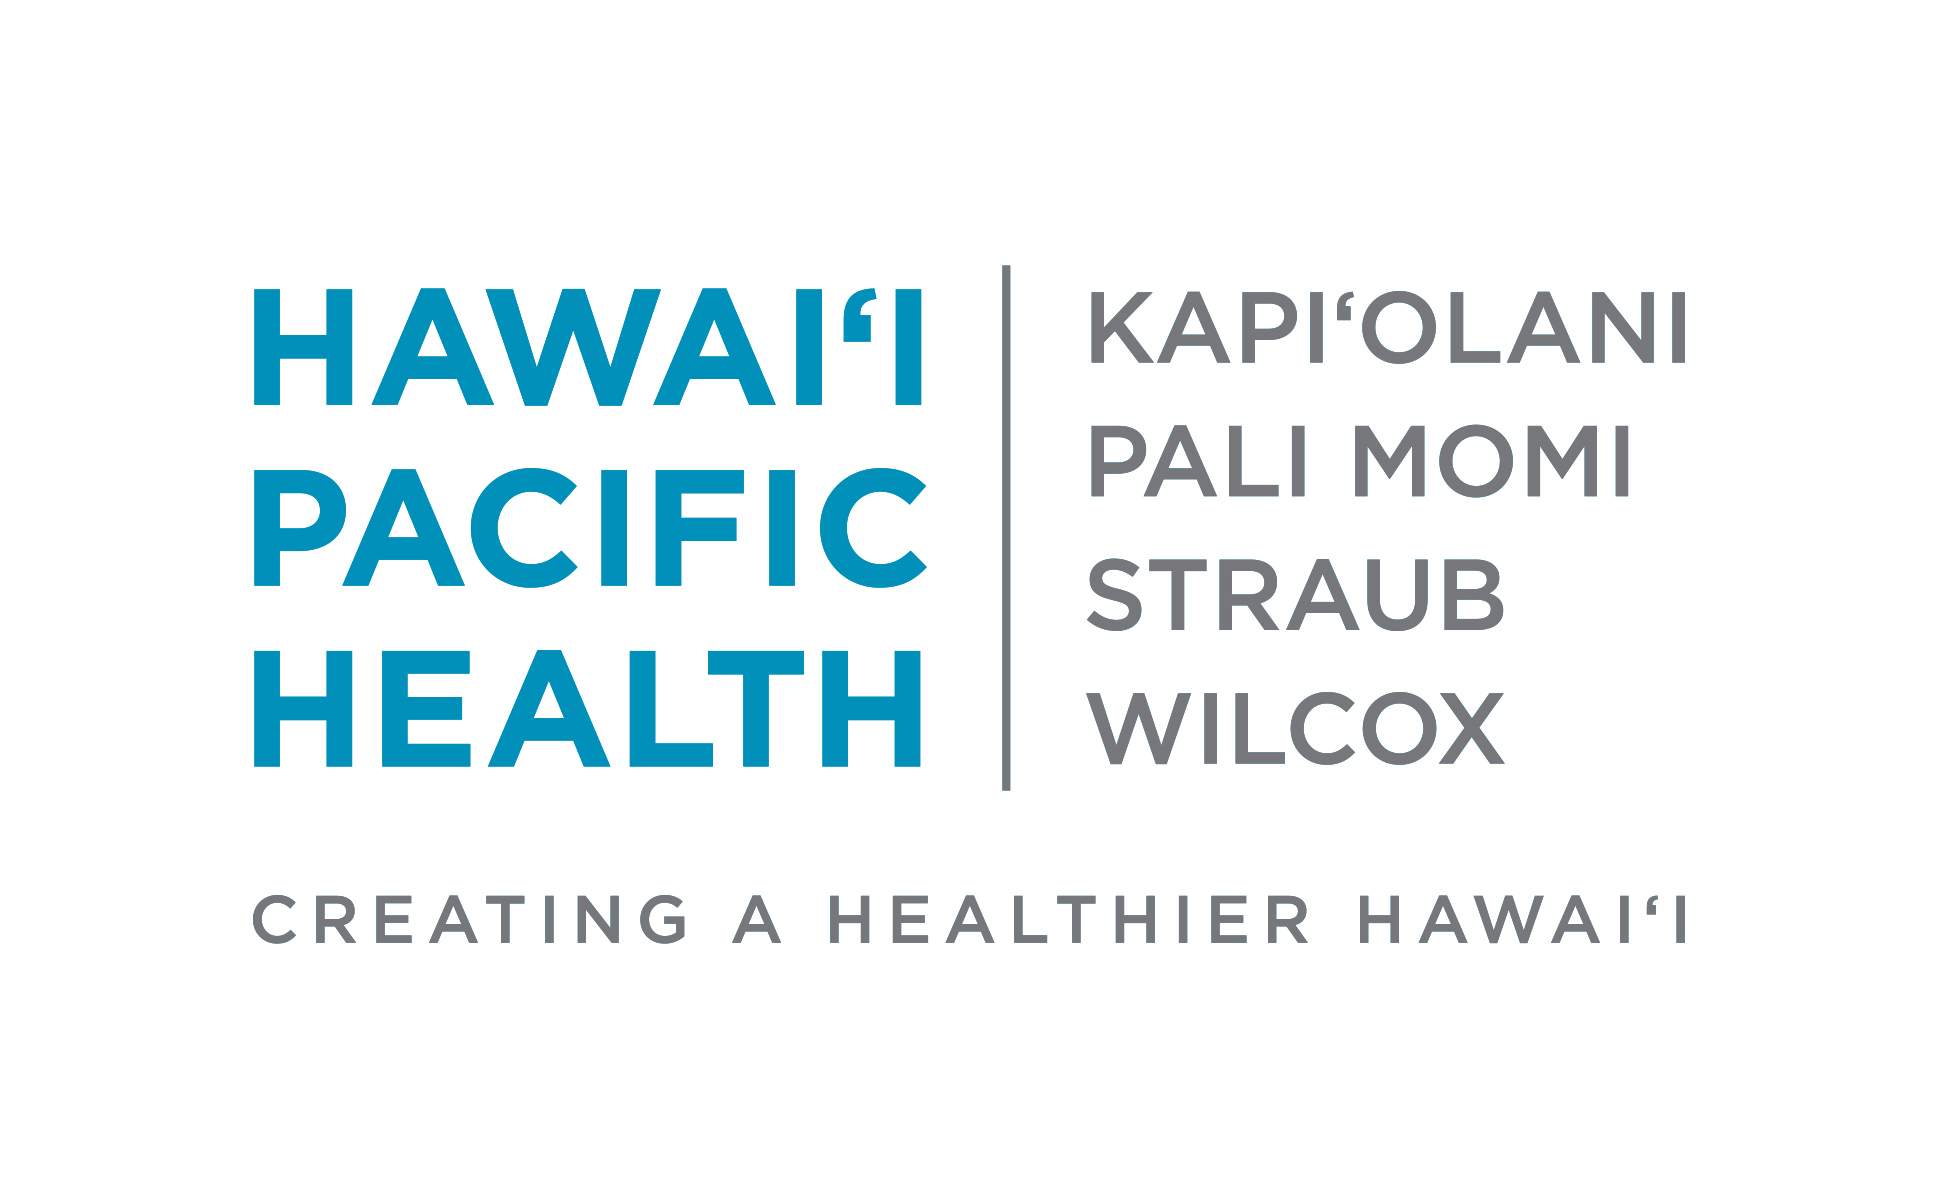 Hawai'i Pacific Health